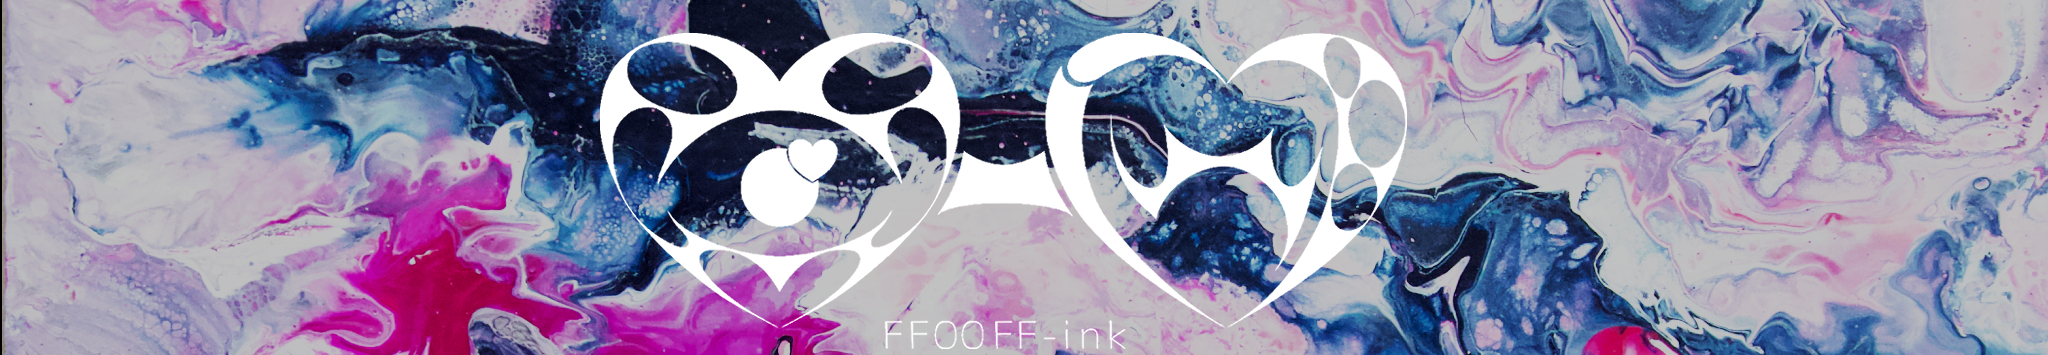 FF00FF-ink マゼンタインク's profile banner